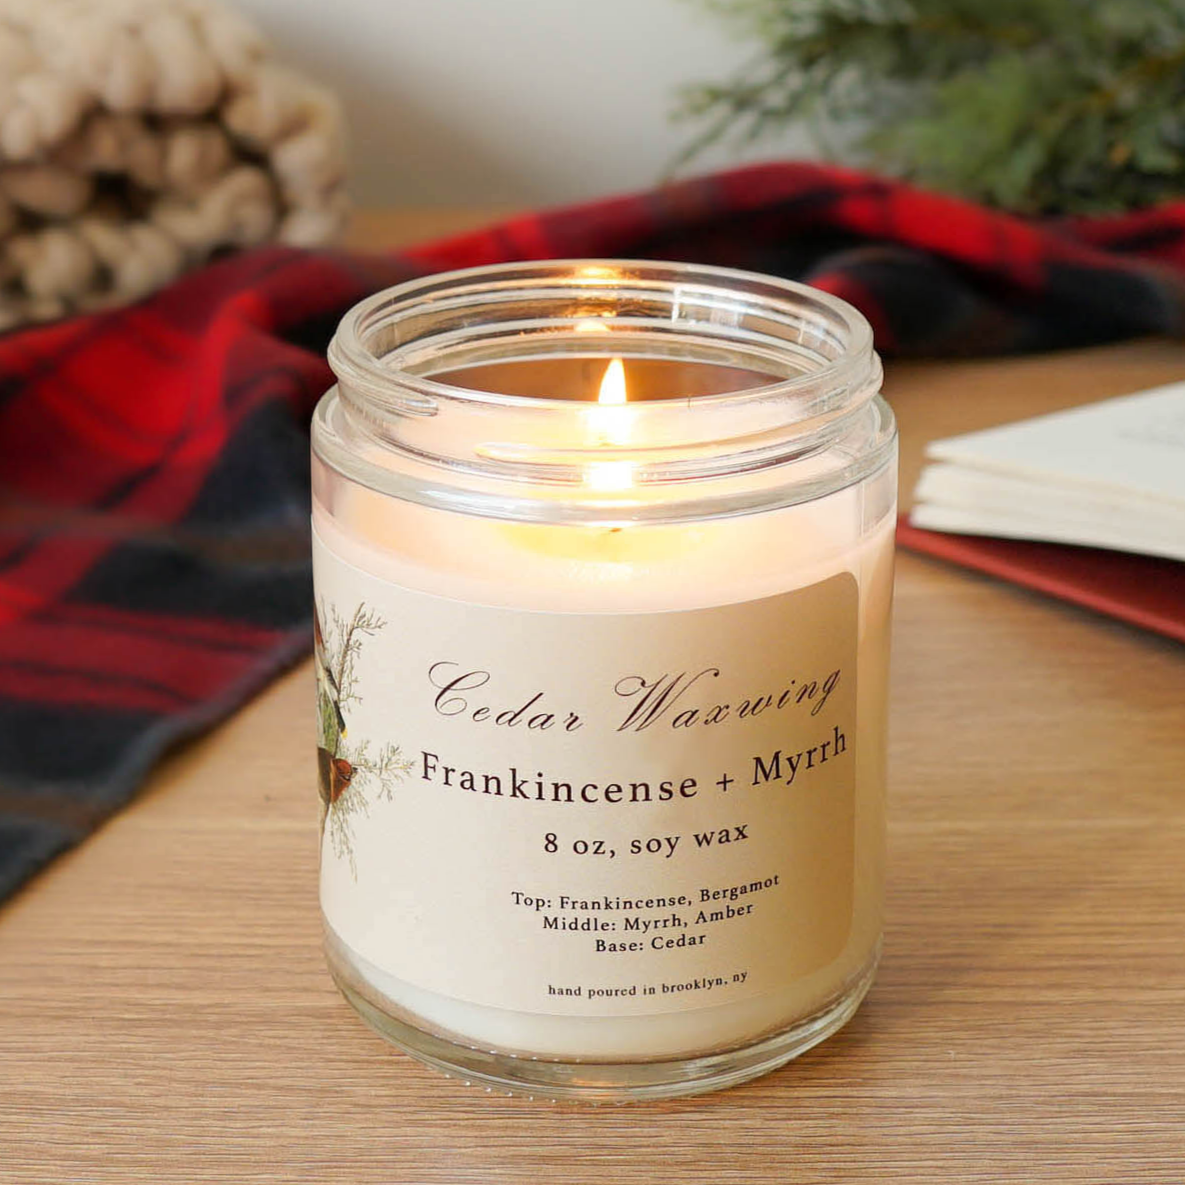 Cedar Waxwing: Frankincense & Myrrh Scented Candle